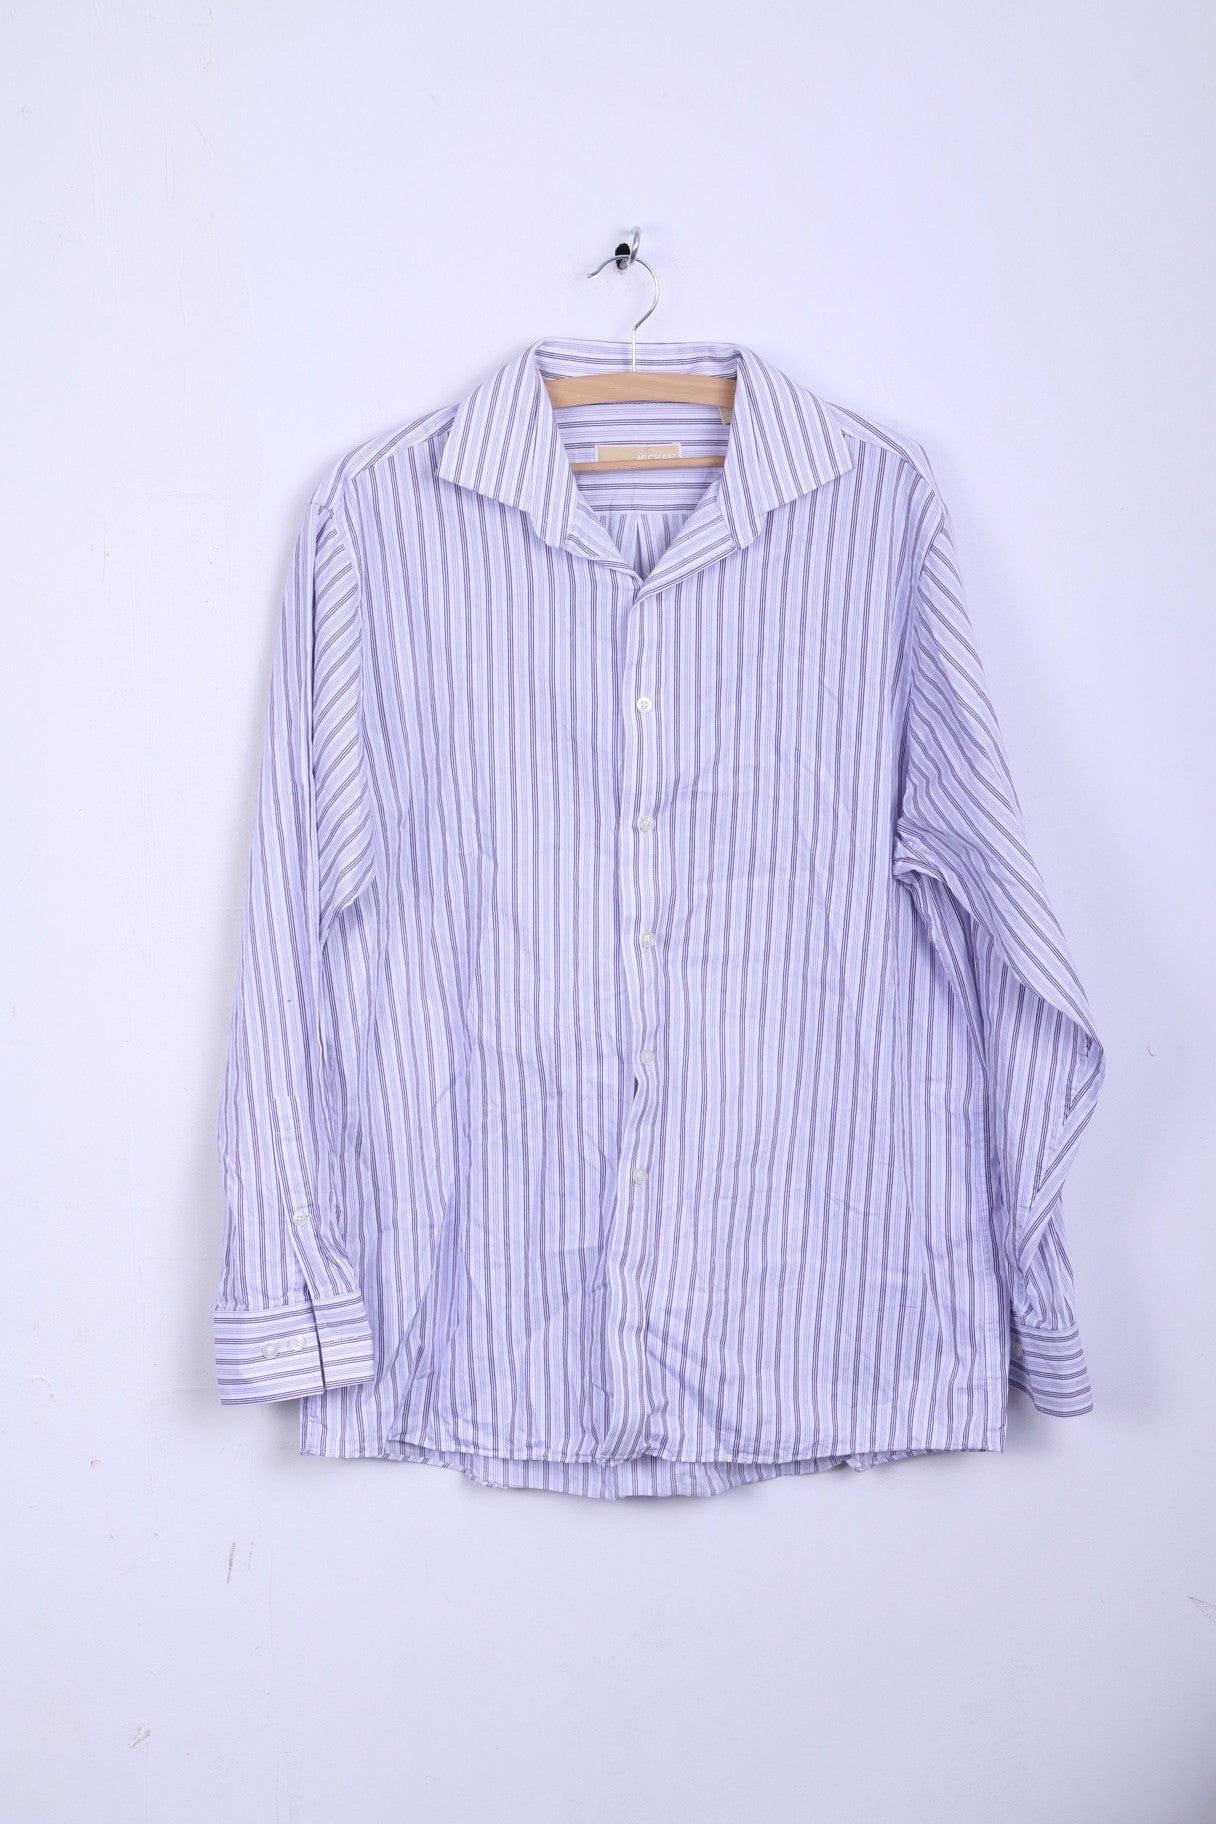 Michael Kors Mens 16.5 34/36 XL Casual Shirt Striped Cotton White Long Sleeve